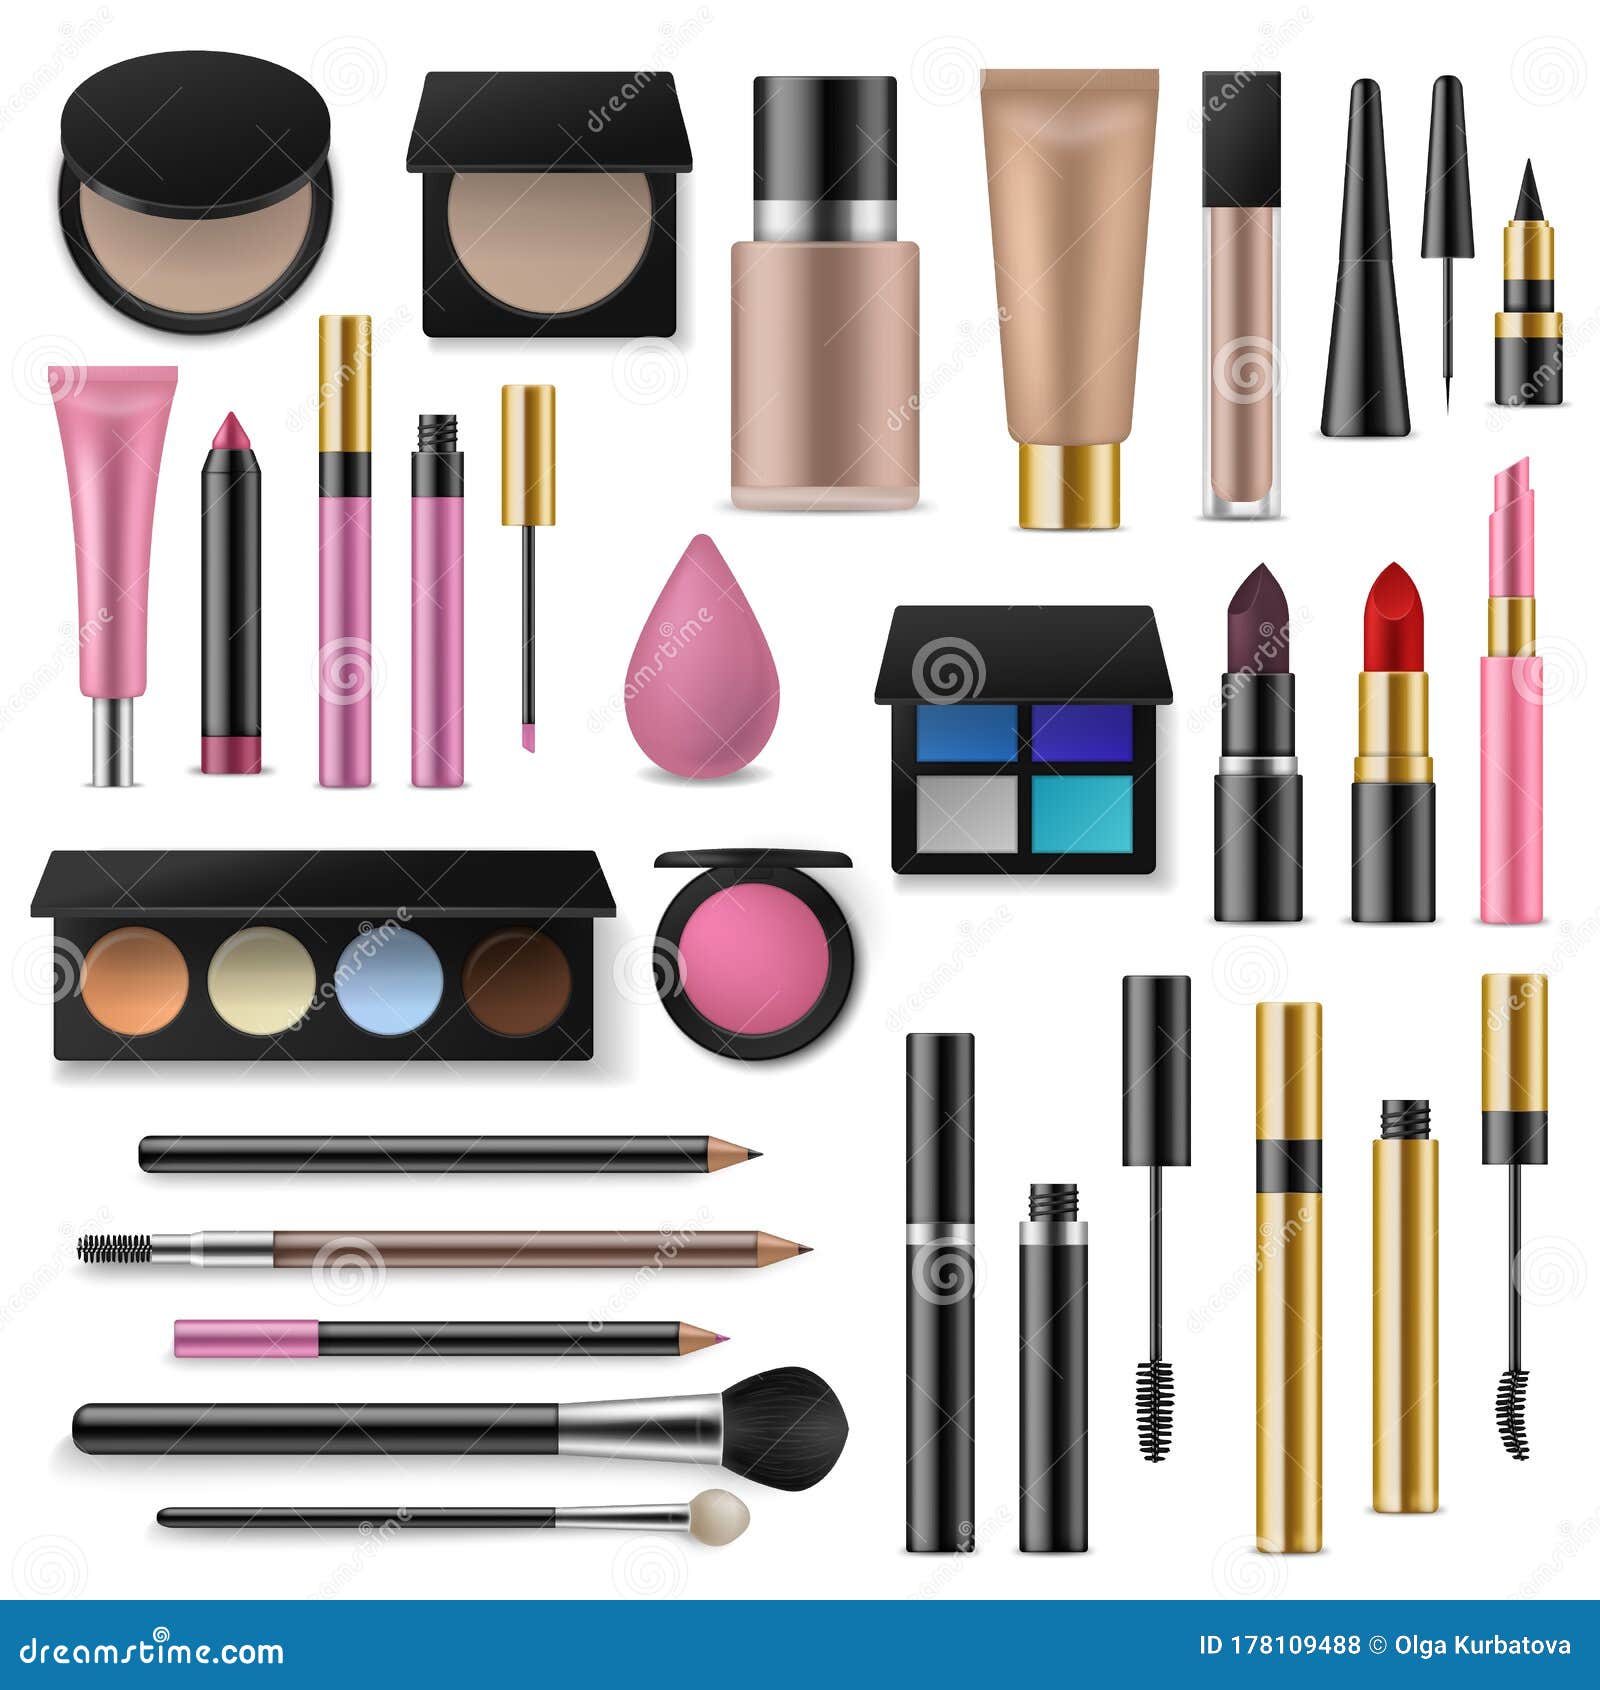 Makeup Cosmetics Tools Professional Accessory For Decorative Cosmetics